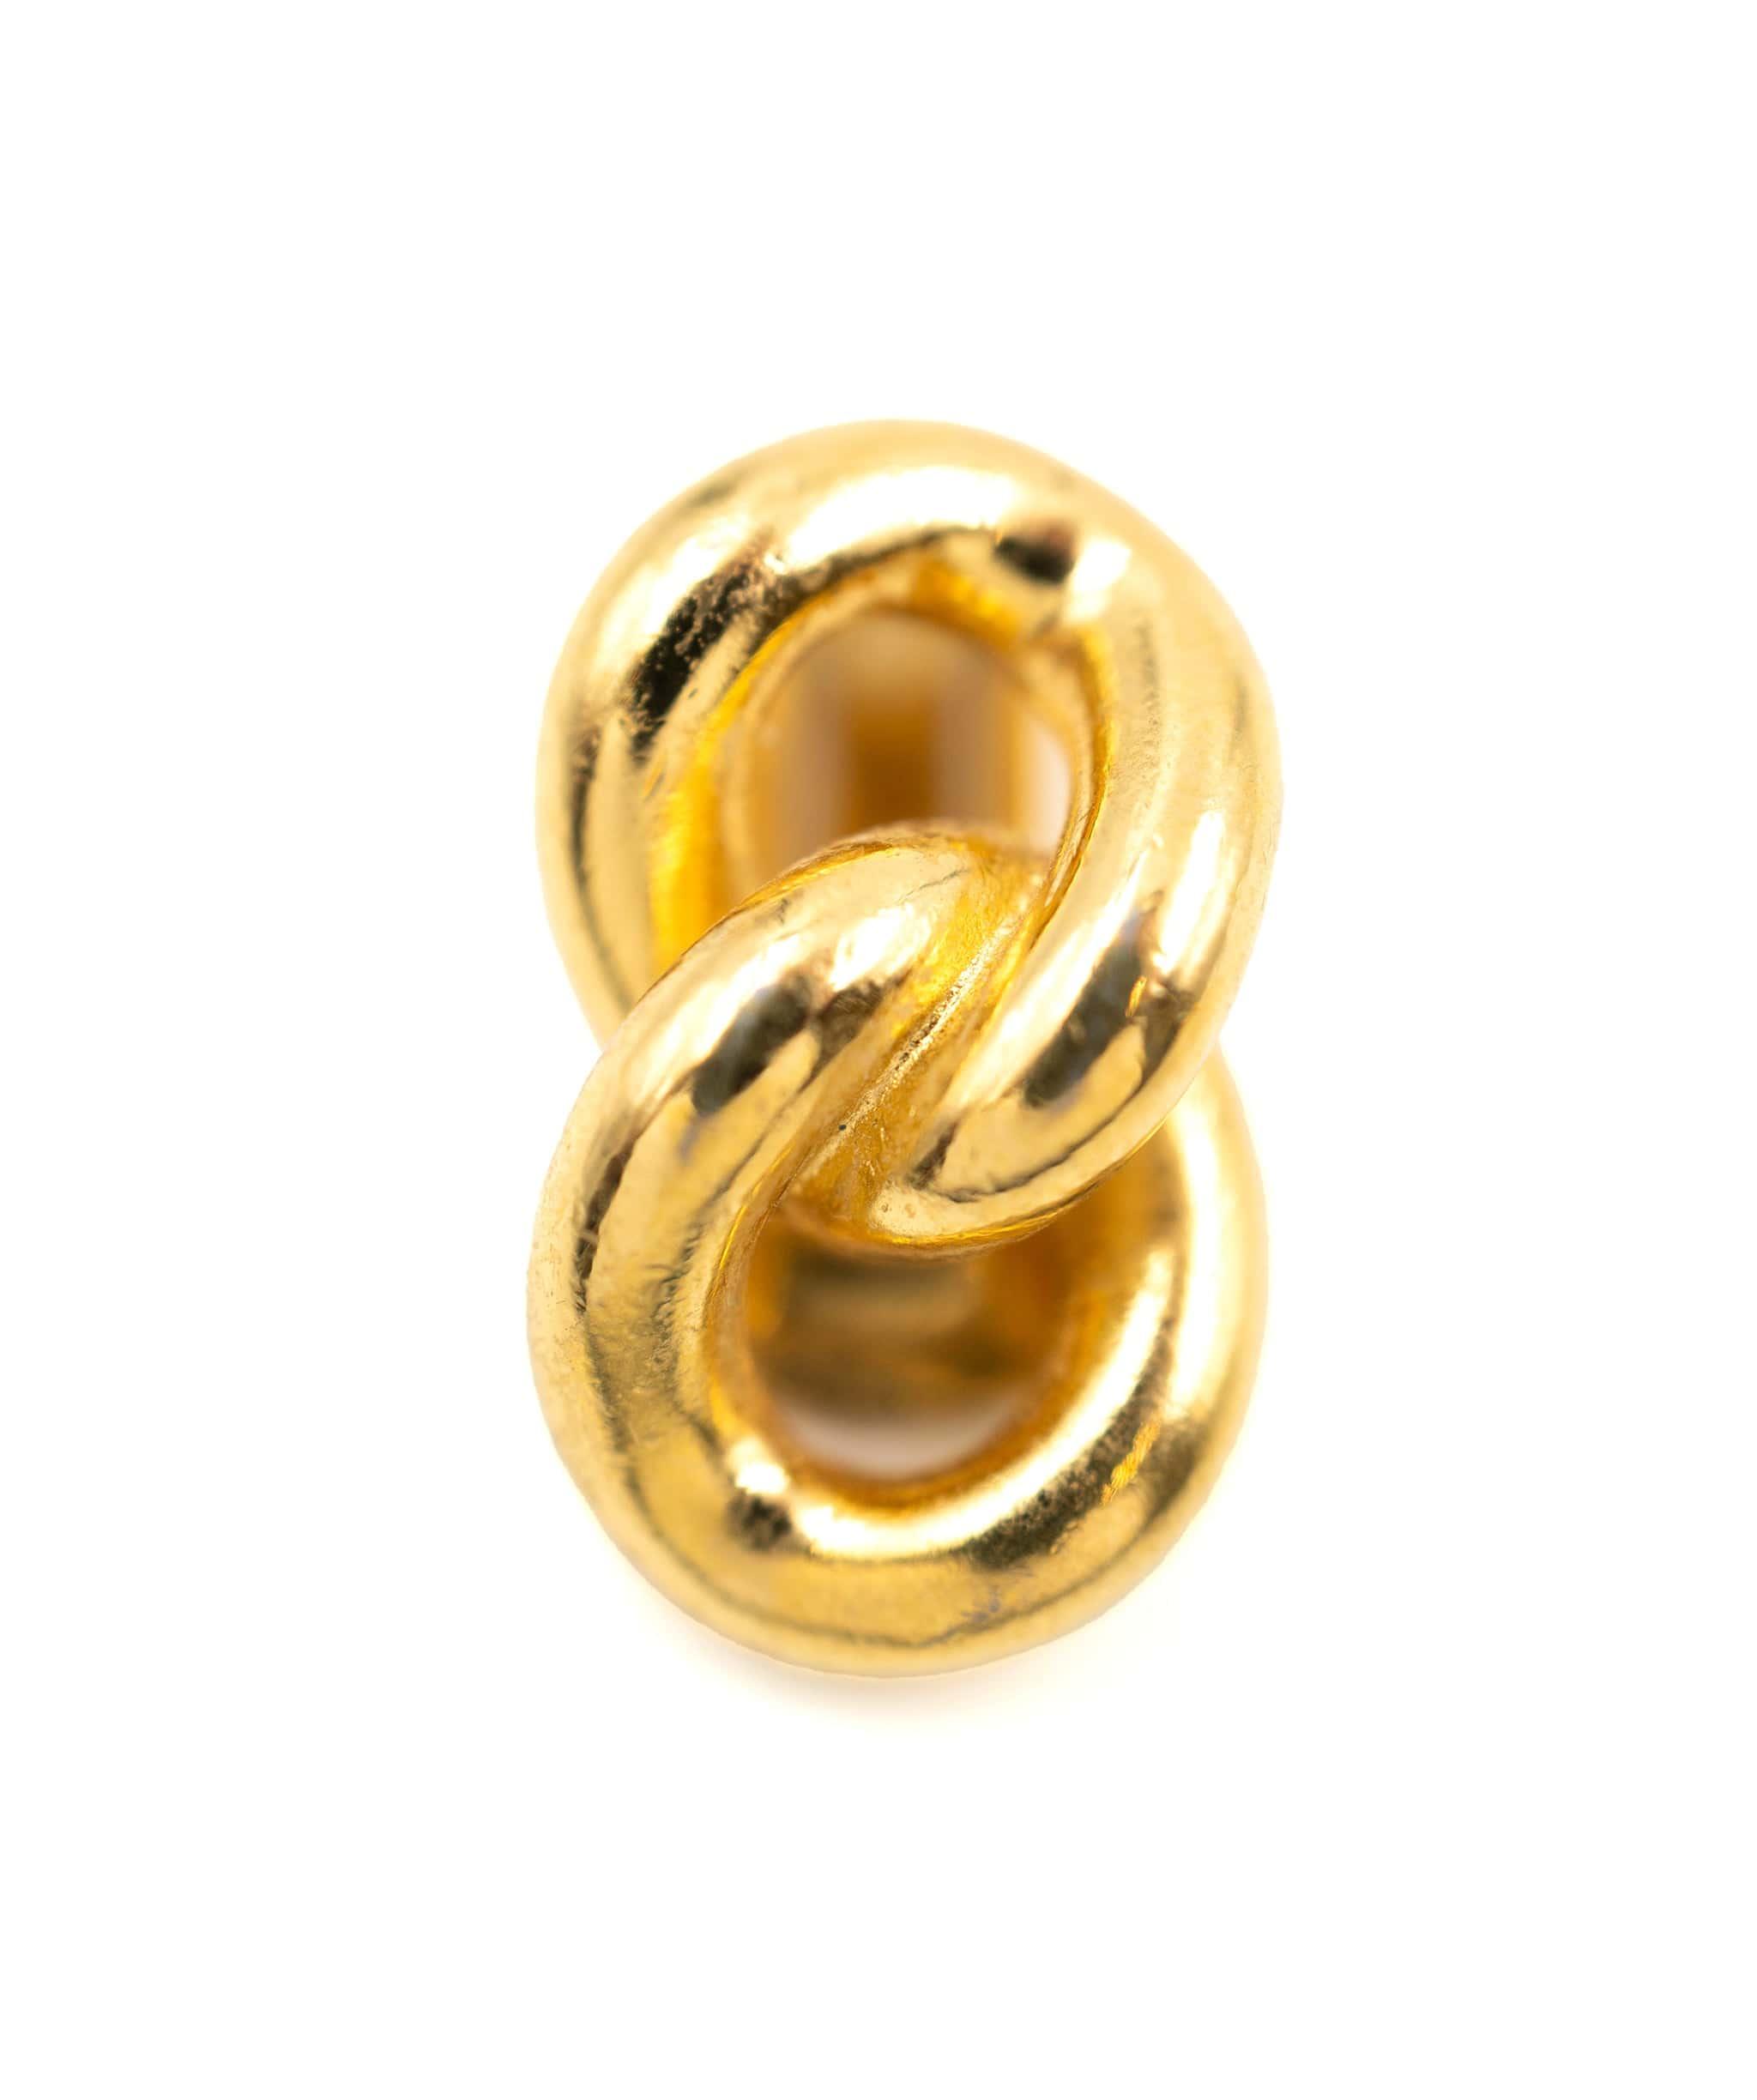 Chanel Christian Dior chain motif earrings GP earrings ASL4201